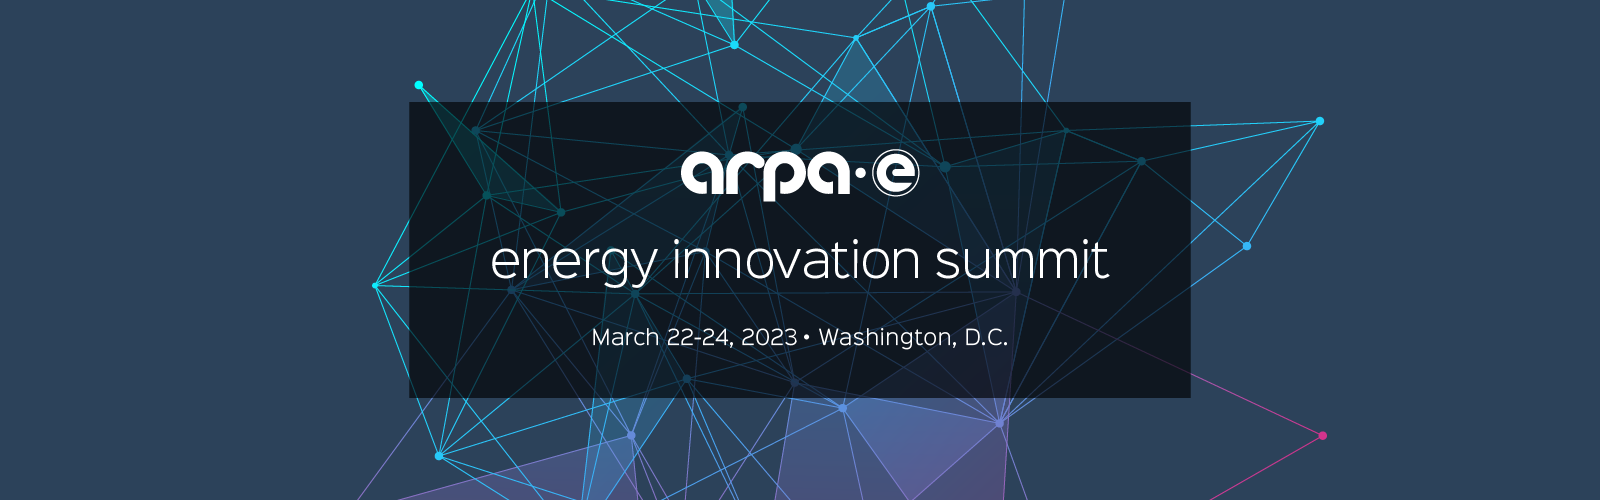 2023 ARPA-E Energy Innovation Summit Graphic